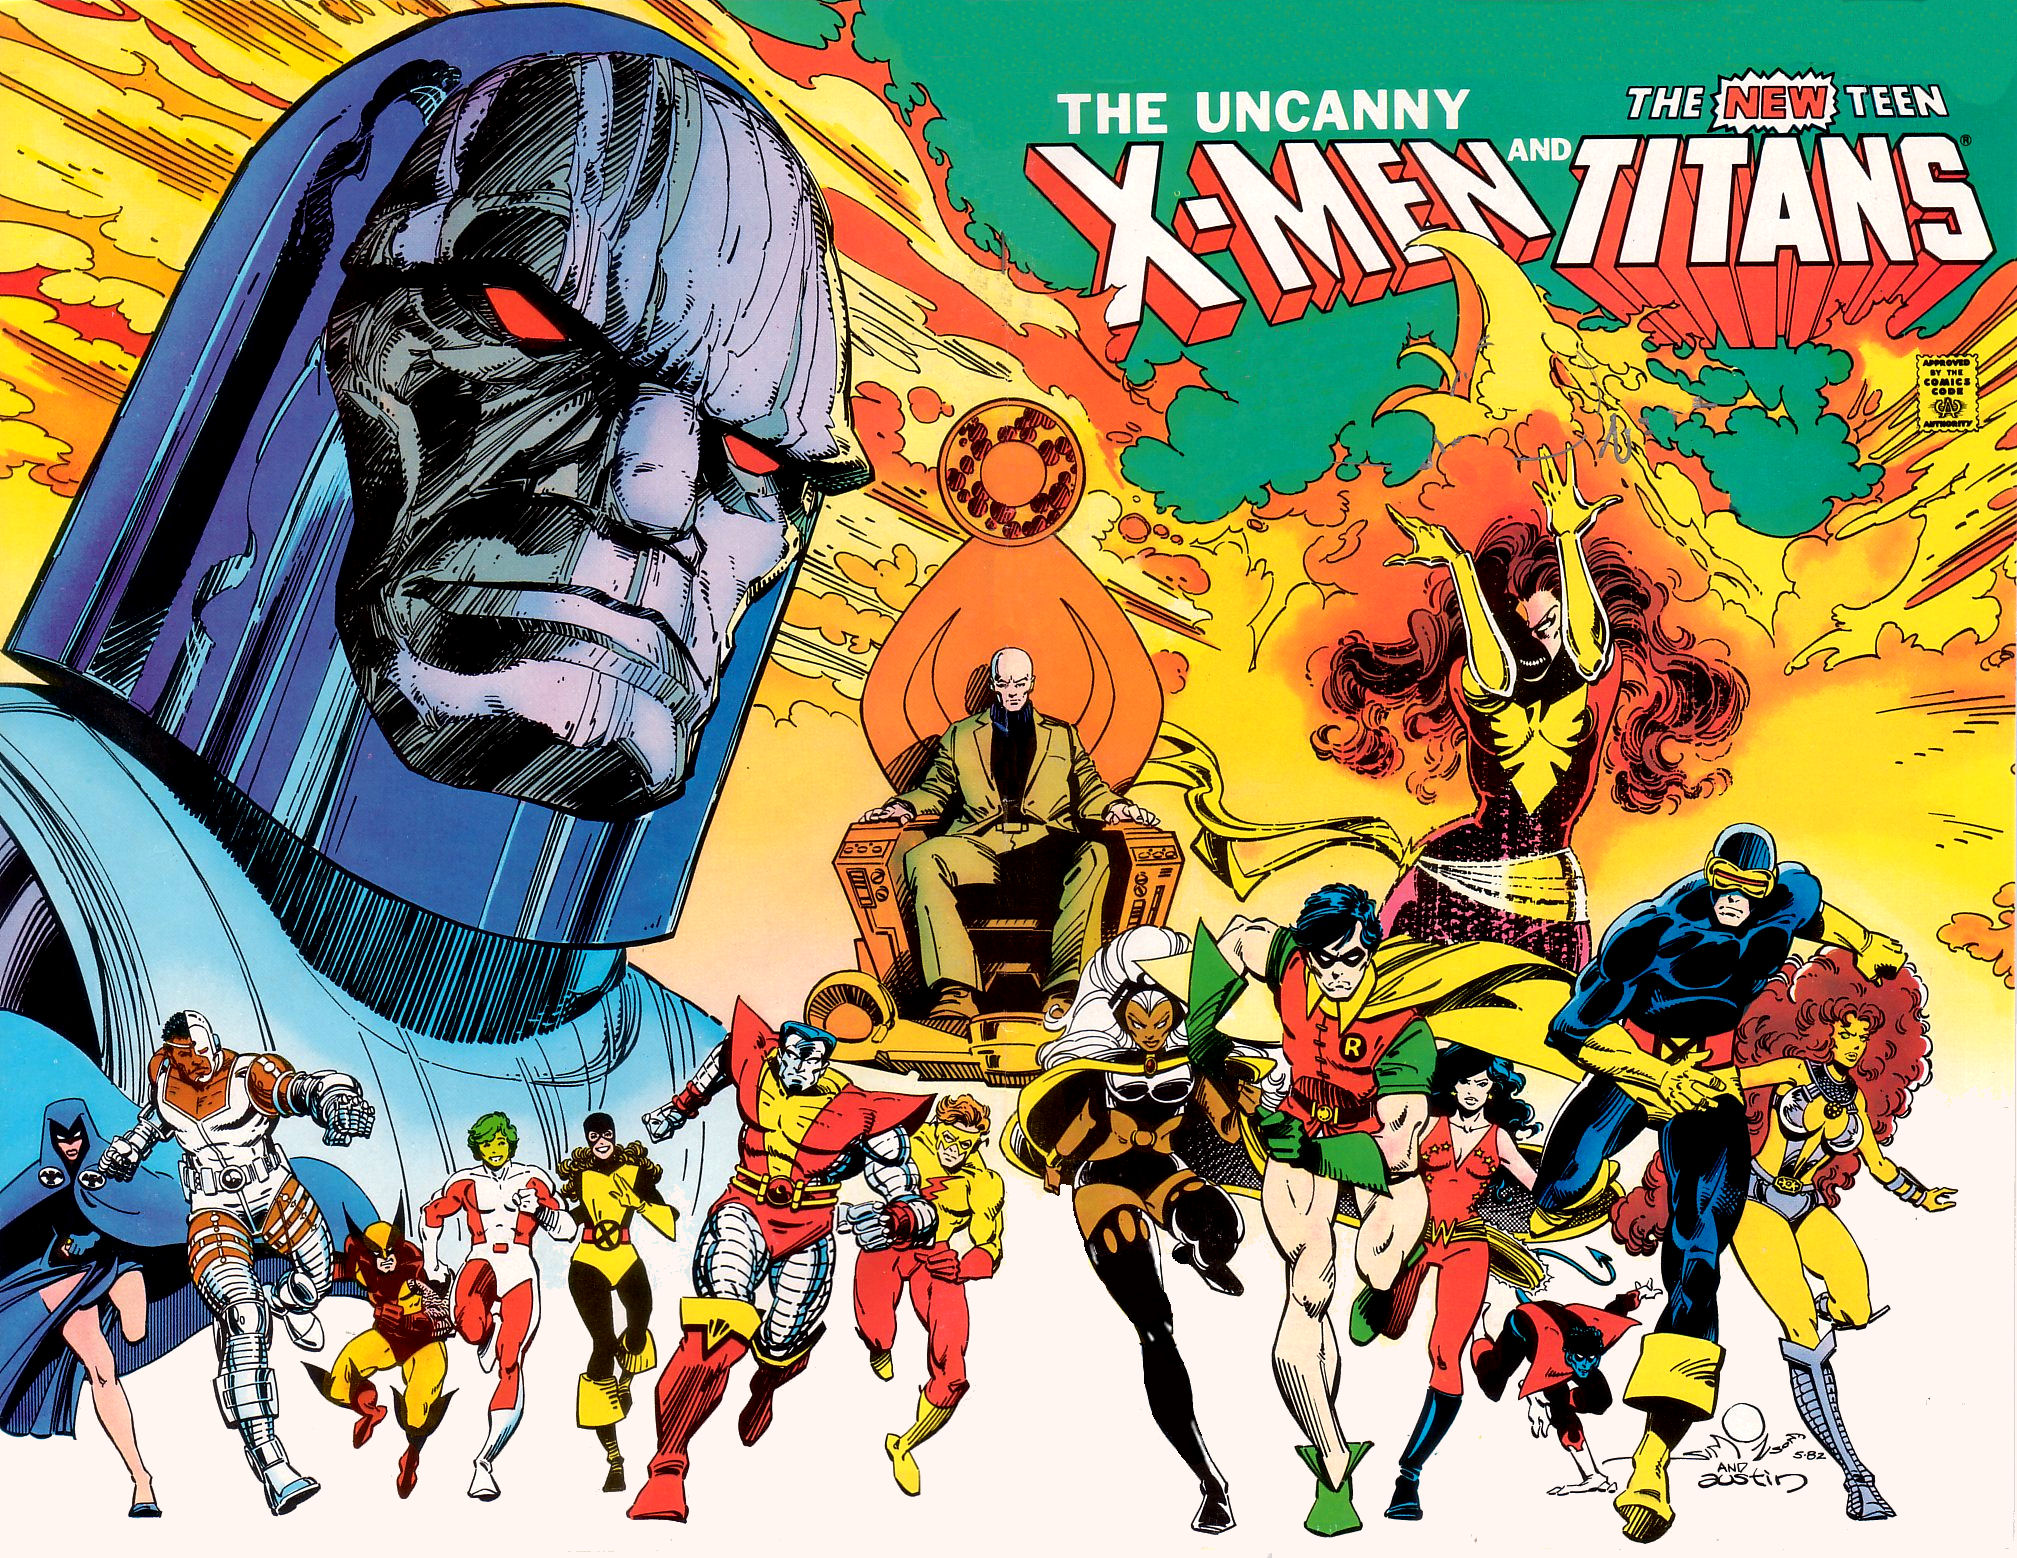 the uncanny x men and the new teen titans, comics, beast boy, charles xavier, colossus, cyborg (dc comics), cyclops (marvel comics), dark phoenix, darkseid (dc comics), dc comics, donna troy, garfield logan, jean grey, kid flash, kitty pryde, nightcrawler (marvel comics), phoenix (marvel comics), professor x, robin (dc comics), starfire (dc comics), storm (marvel comics), teen titans, uncanny x men, wally west, wolverine, wonder girl wallpapers for tablet